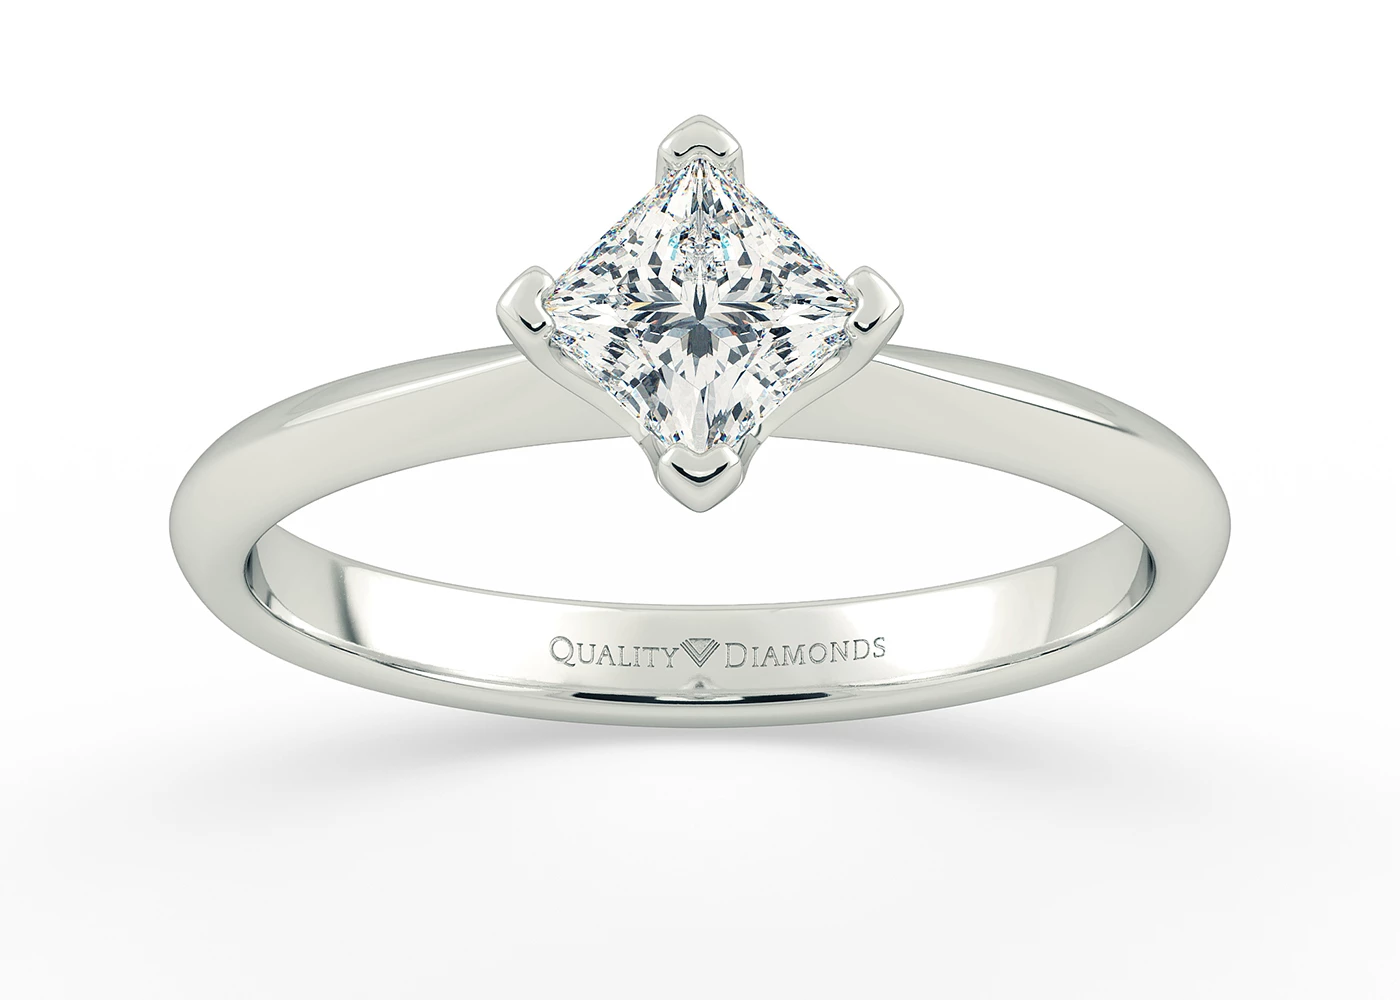 Princess Olfa Diamond Ring in Platinum